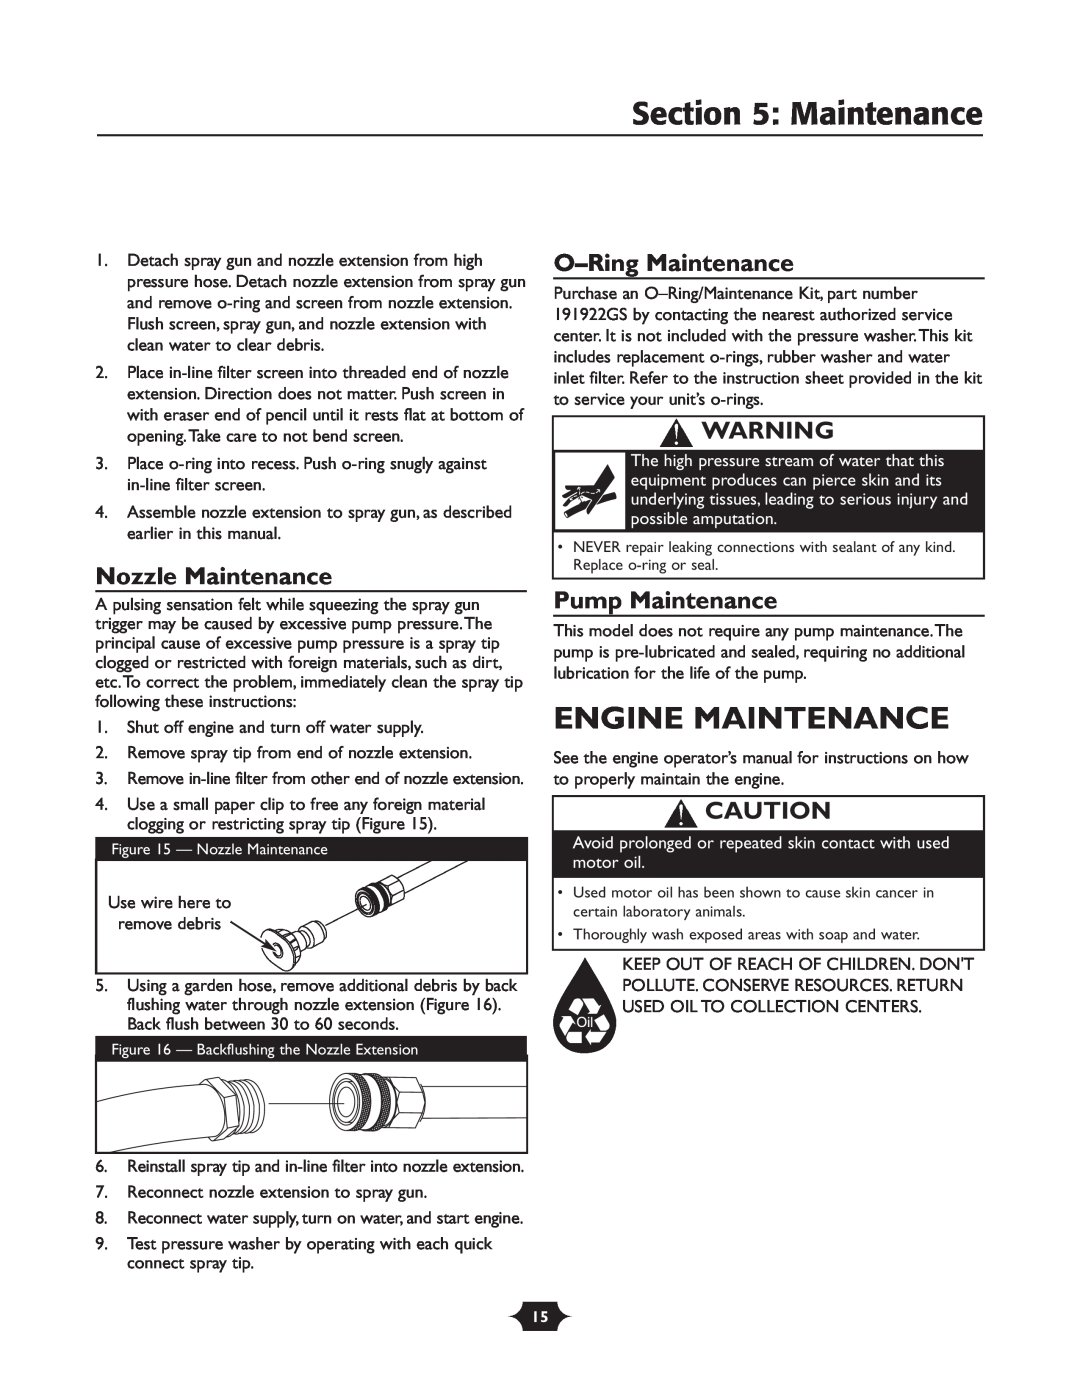 Troy-Bilt 020242-4 manual Engine Maintenance, Nozzle Maintenance, O-RingMaintenance, Pump Maintenance 